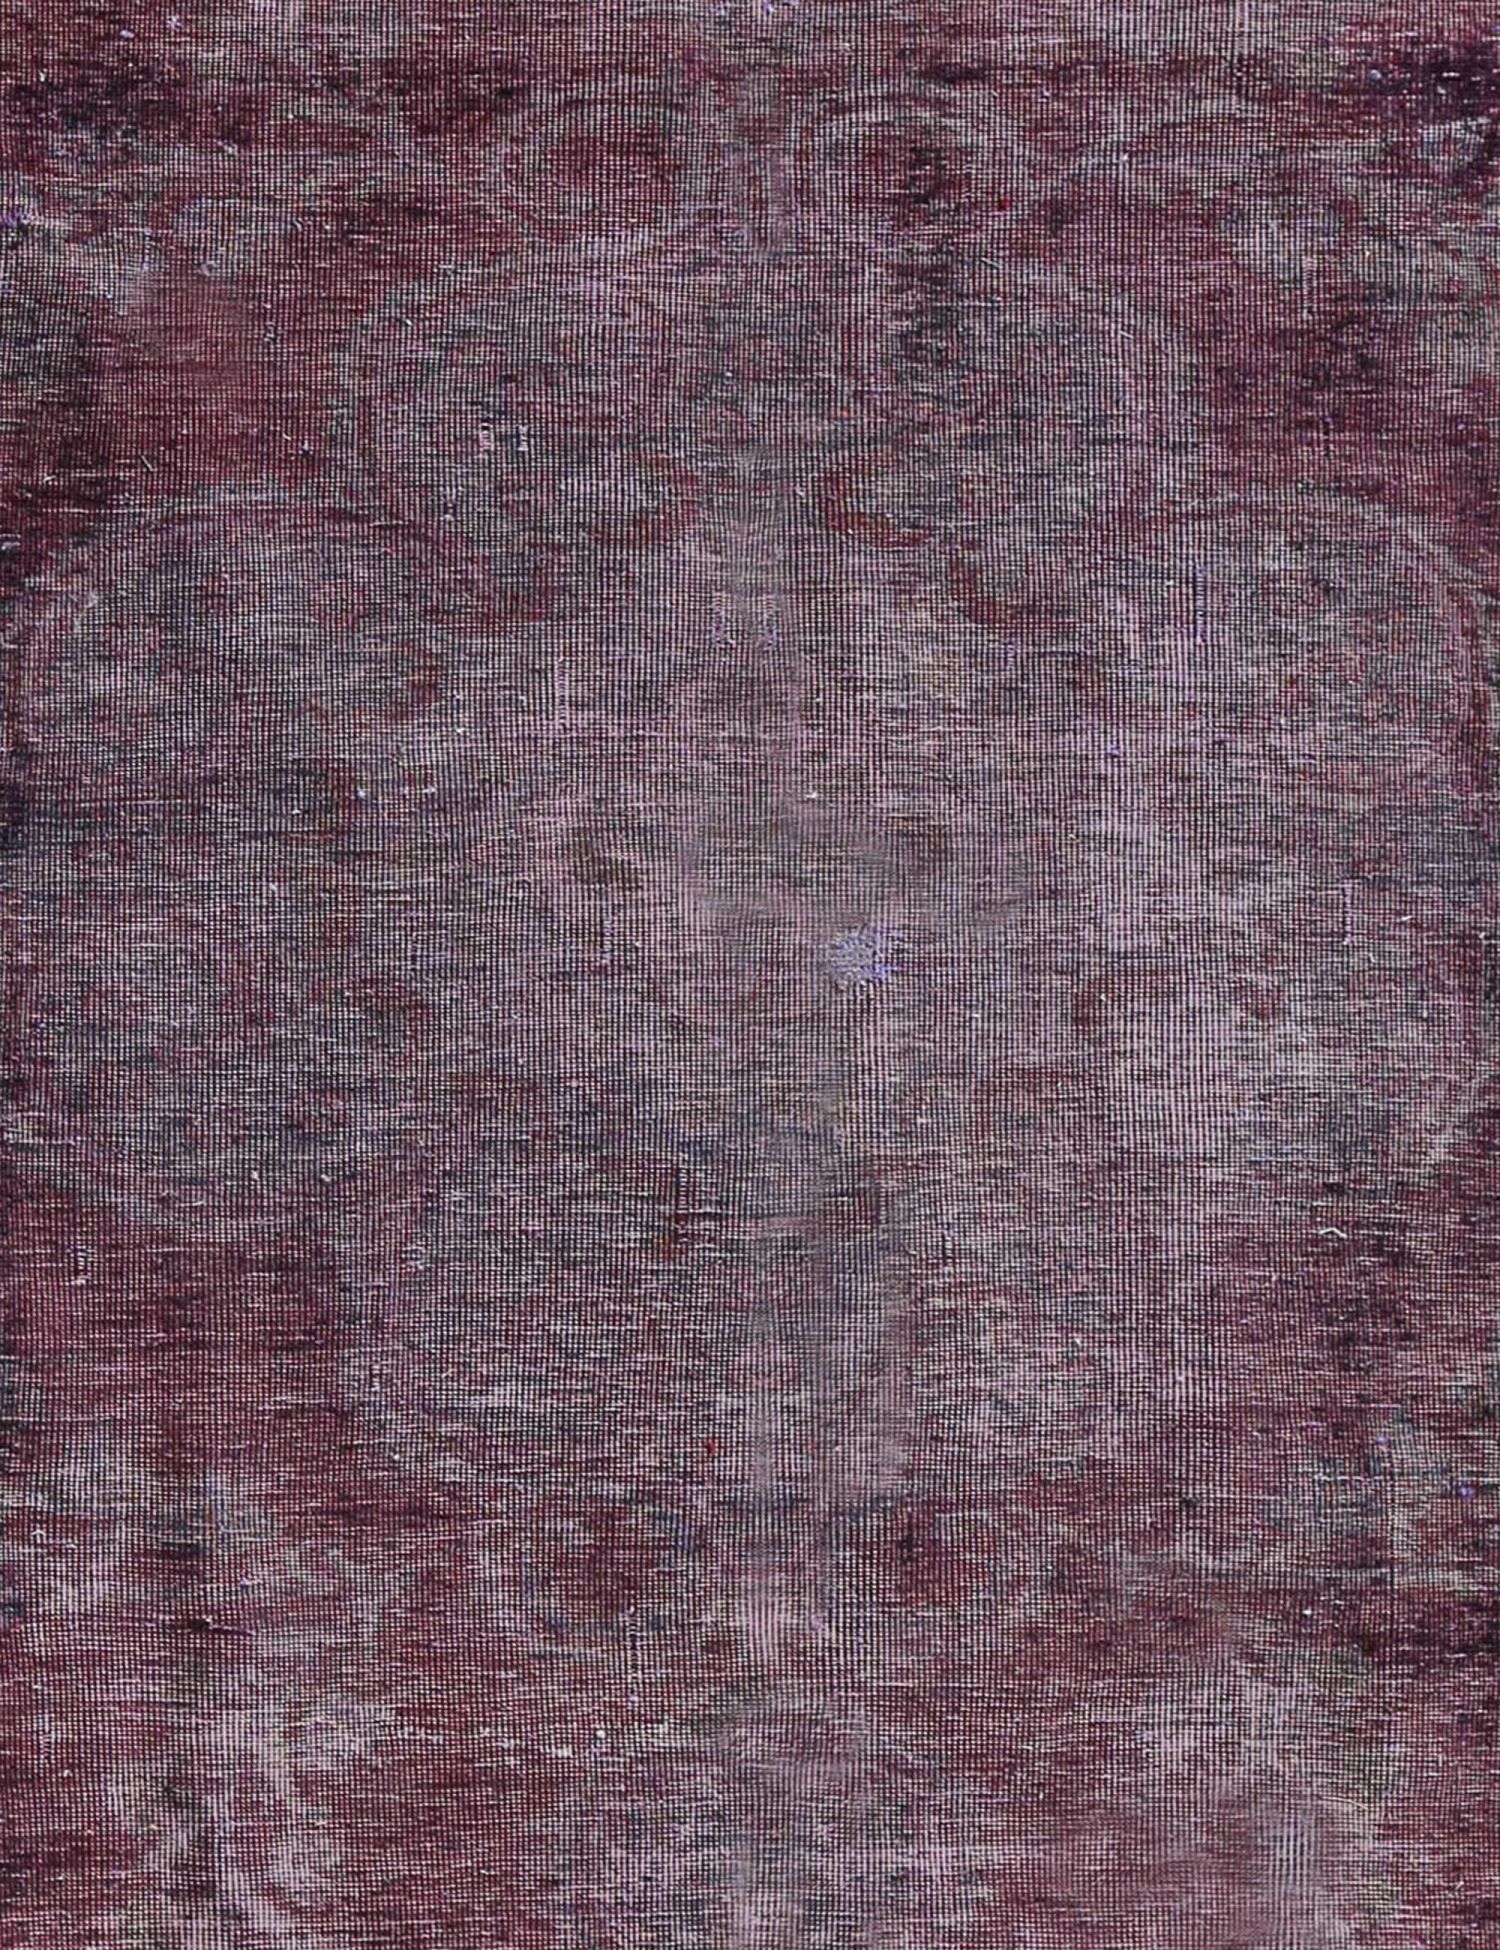 Vintage Teppich  lila <br/>181 x 181 cm